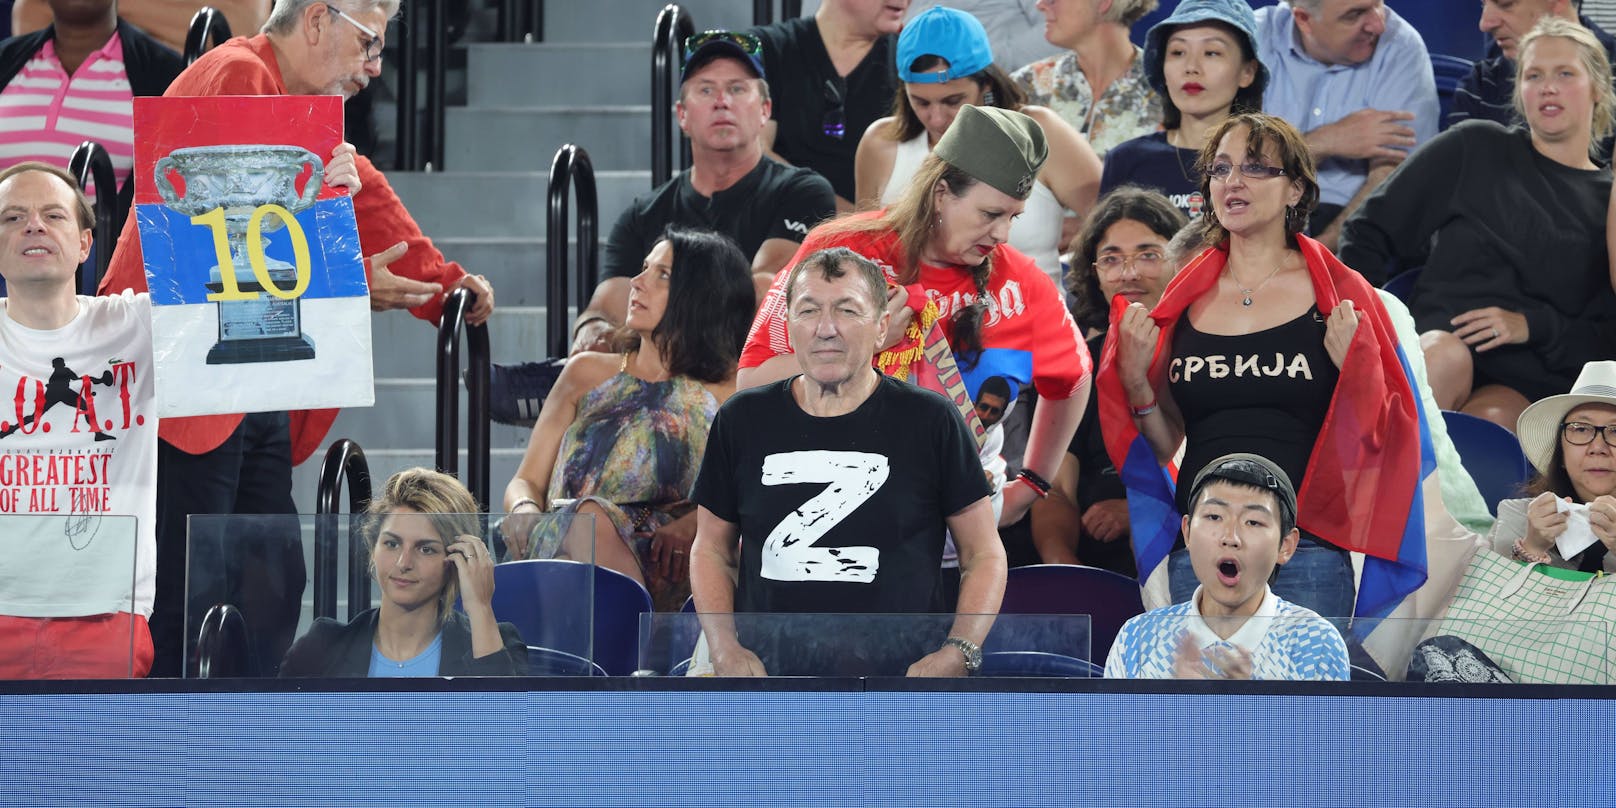 Ein Fan trug das Z-T-Shirt